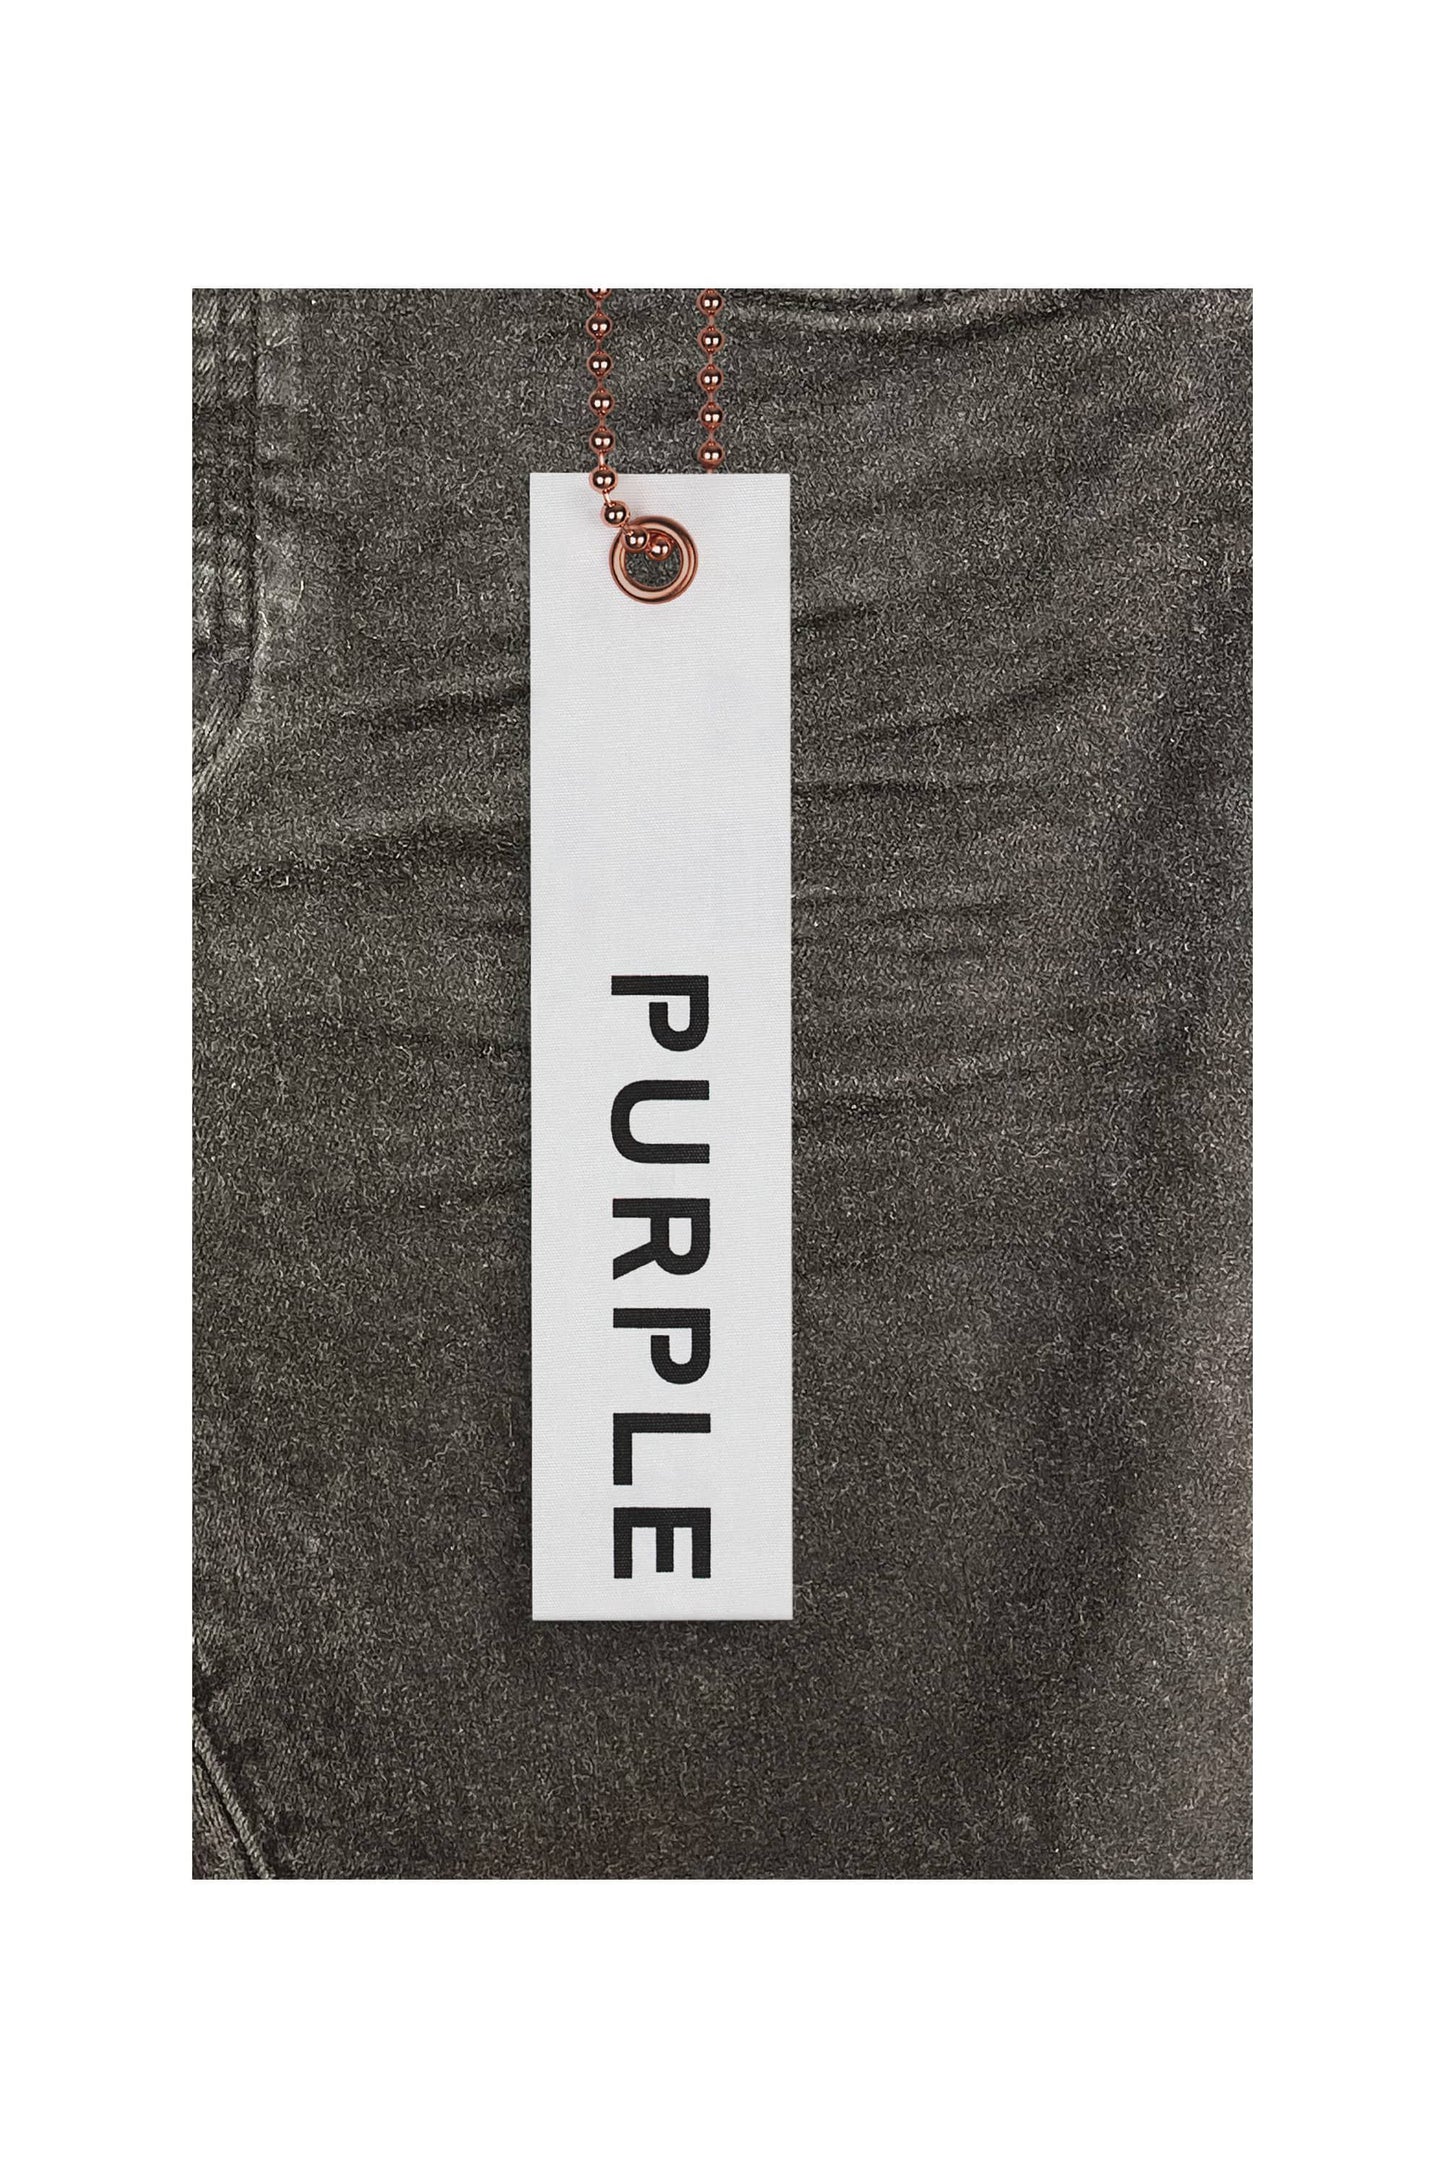 PURPLE BRAND - Men's Denim Jean - Low Rise Skinny - Style No. P001 - Grey Wax Coated - Hangtag